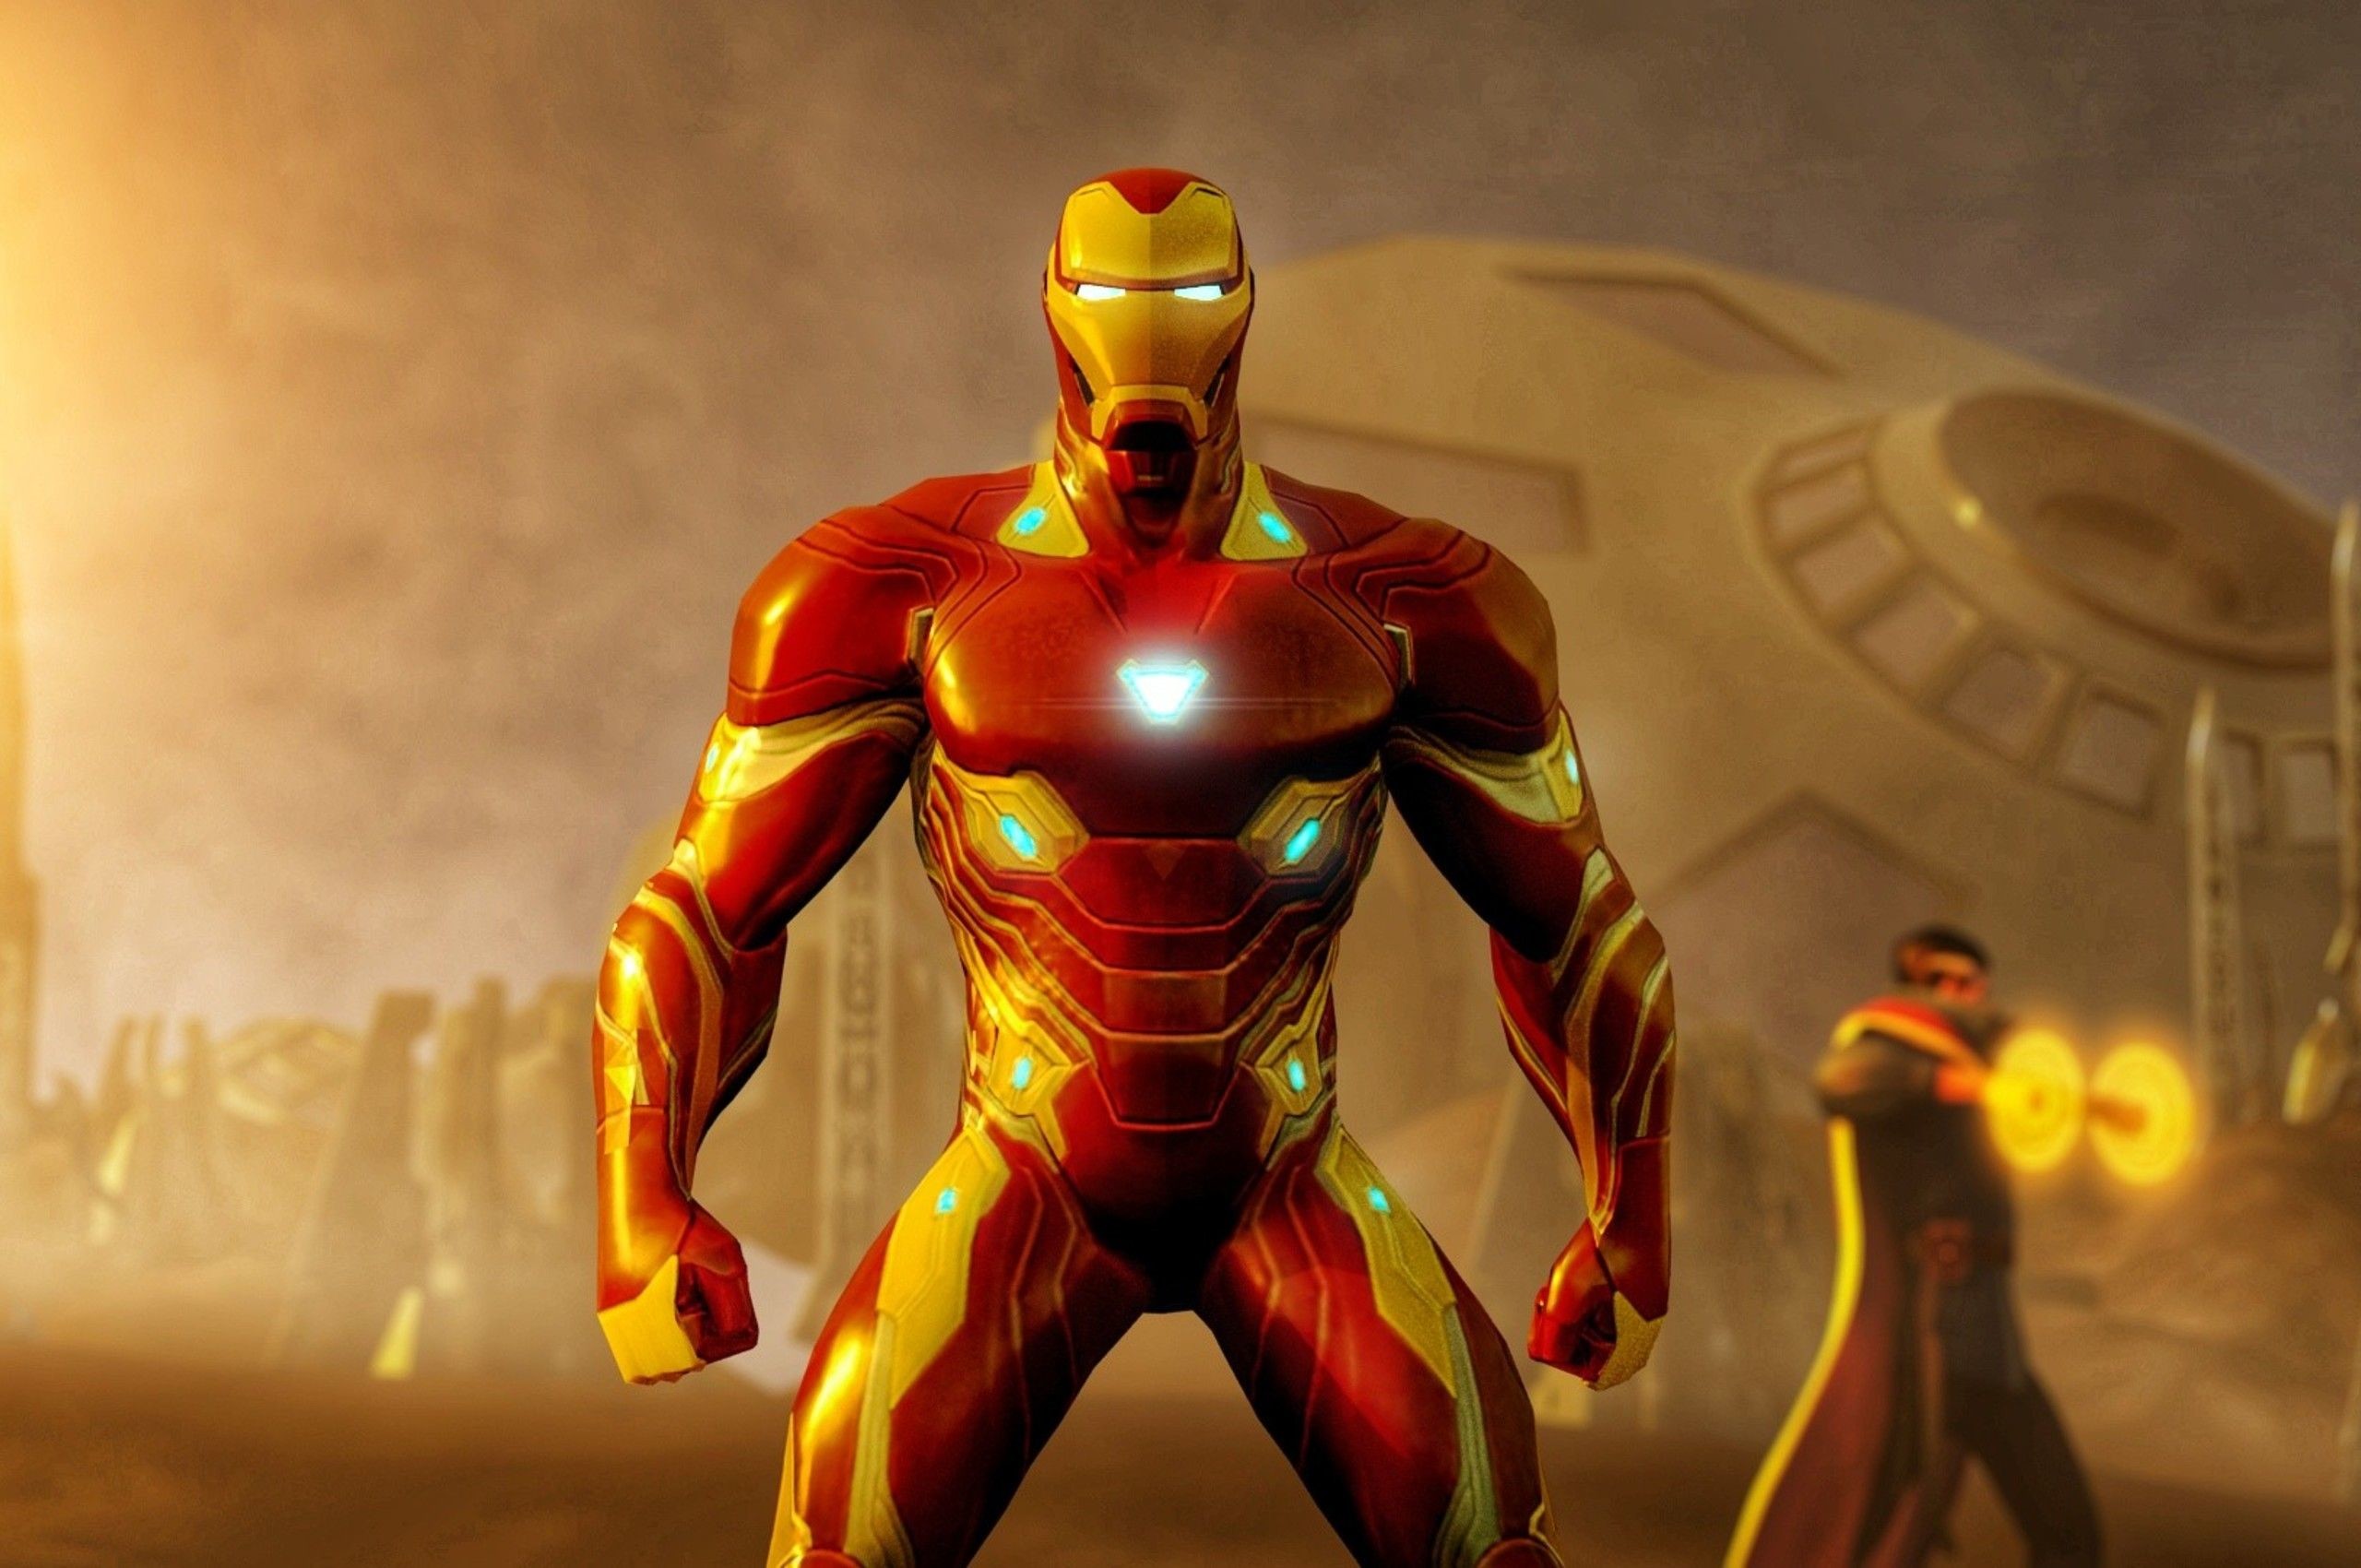 Iron Man Armor Wallpaper.